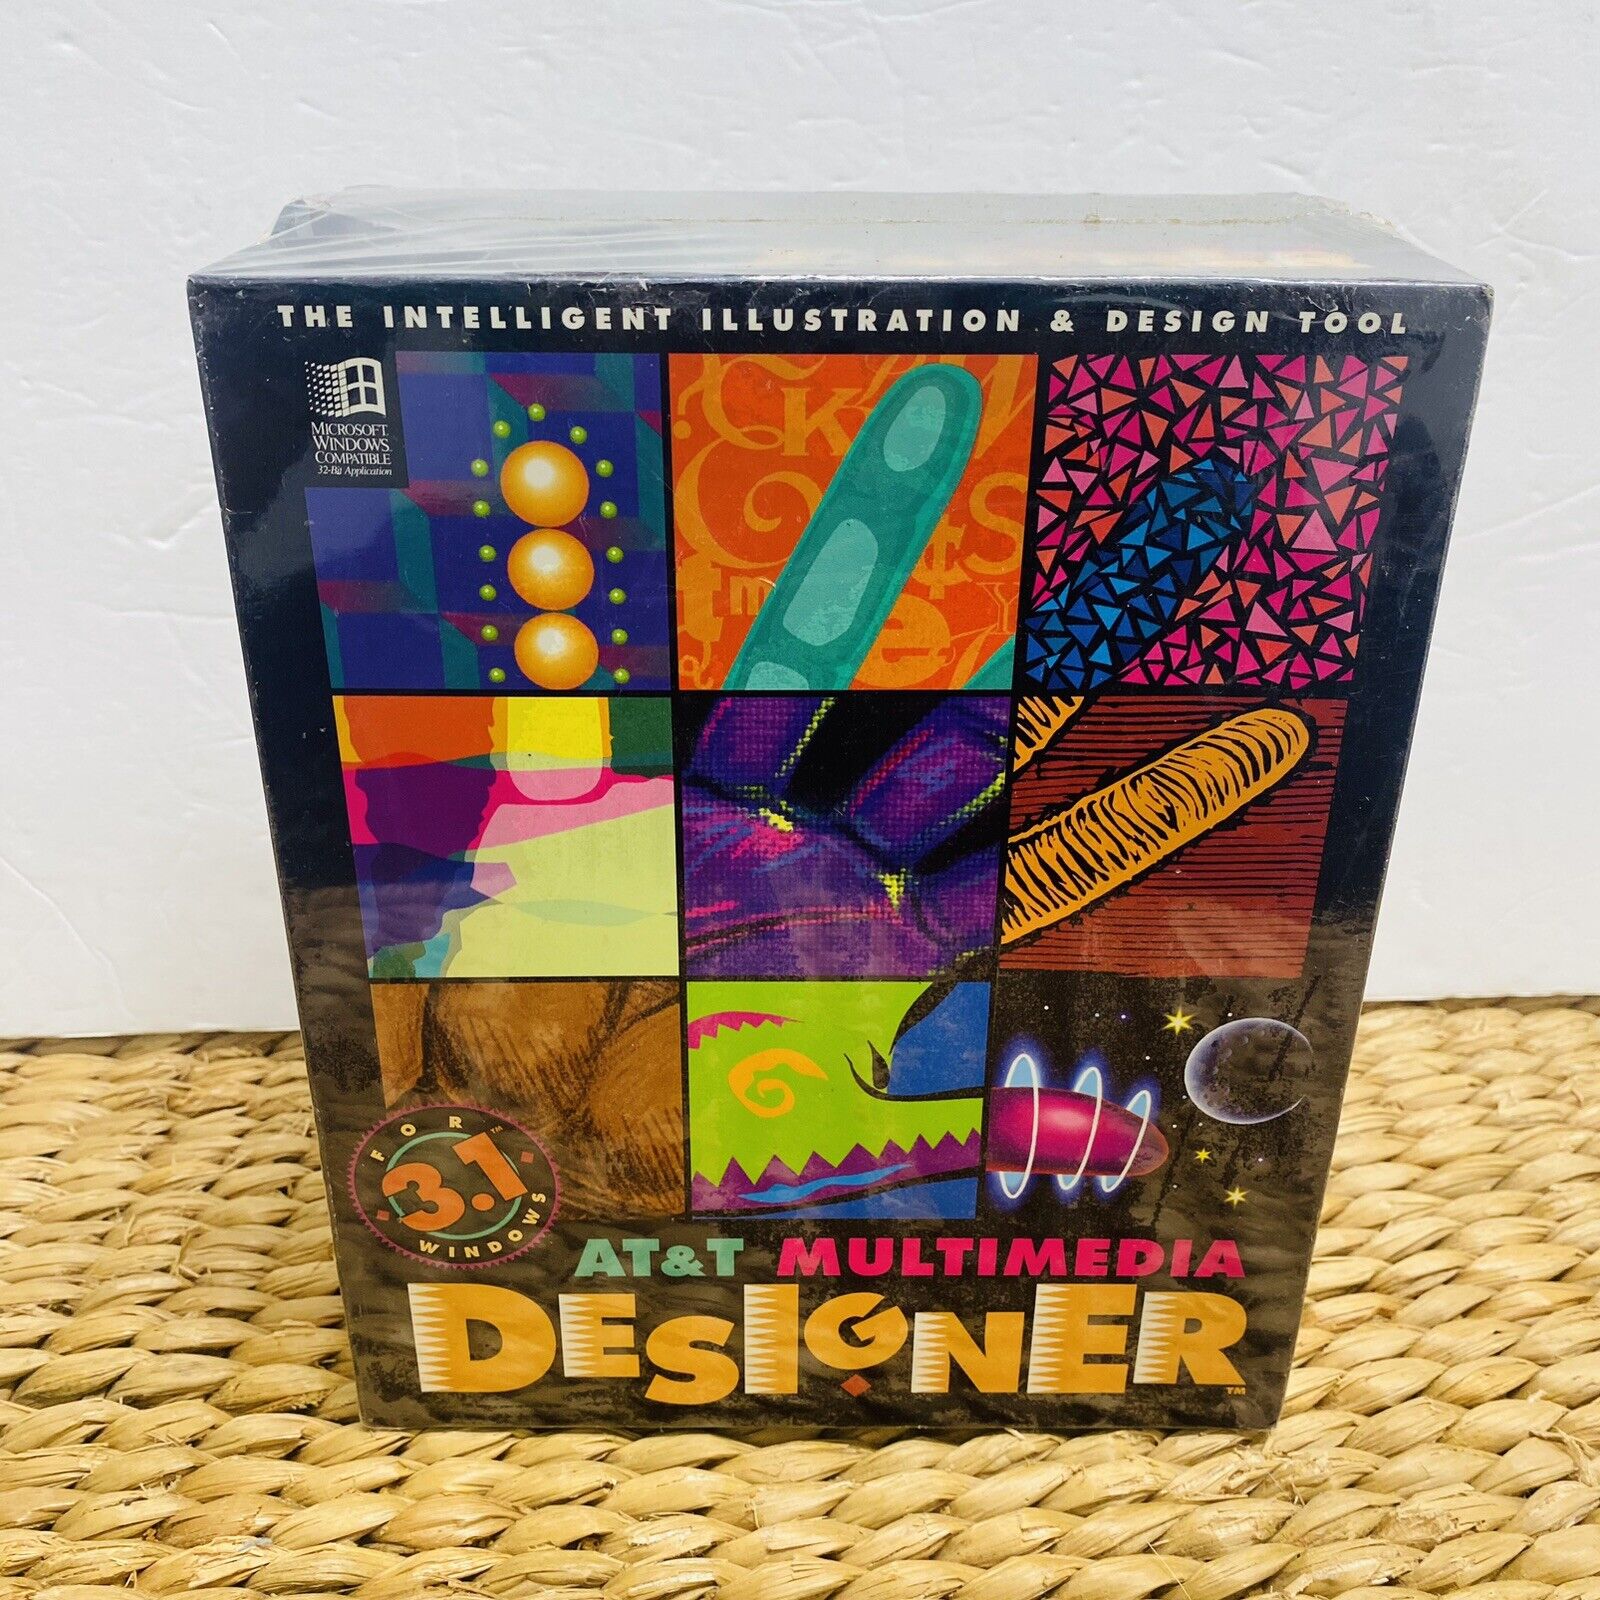 New Sealed AT&T Multimedia Designer Microsoft Windows 3.1 CD Software Rare 1990s